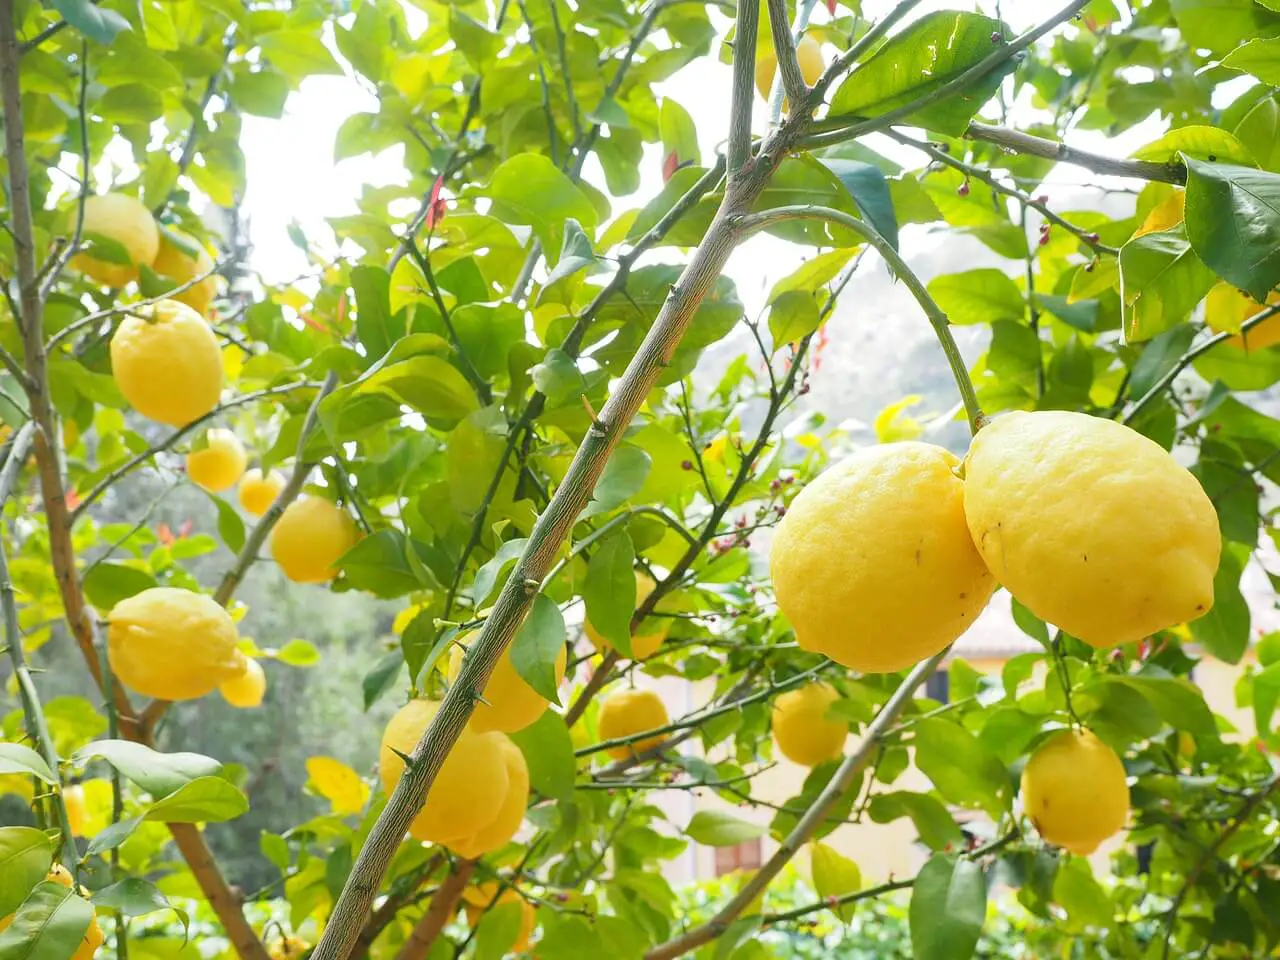 Sweet lemons: a variety worth keeping